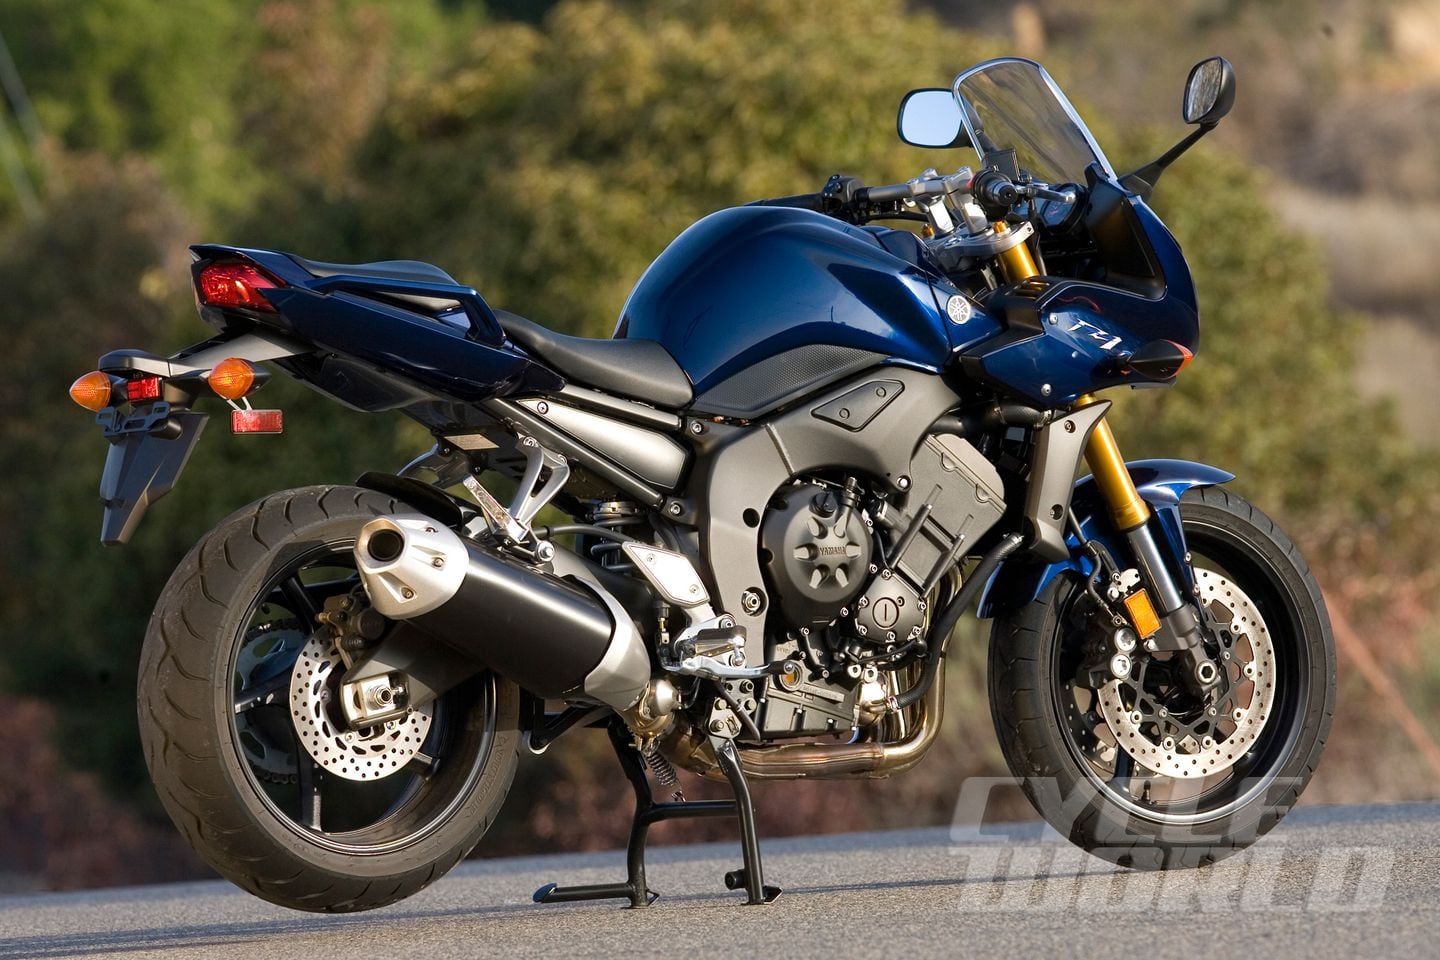 Suzuki Bandit 1250S vs. Yamaha Comparison Test Review- Specs | Cycle World